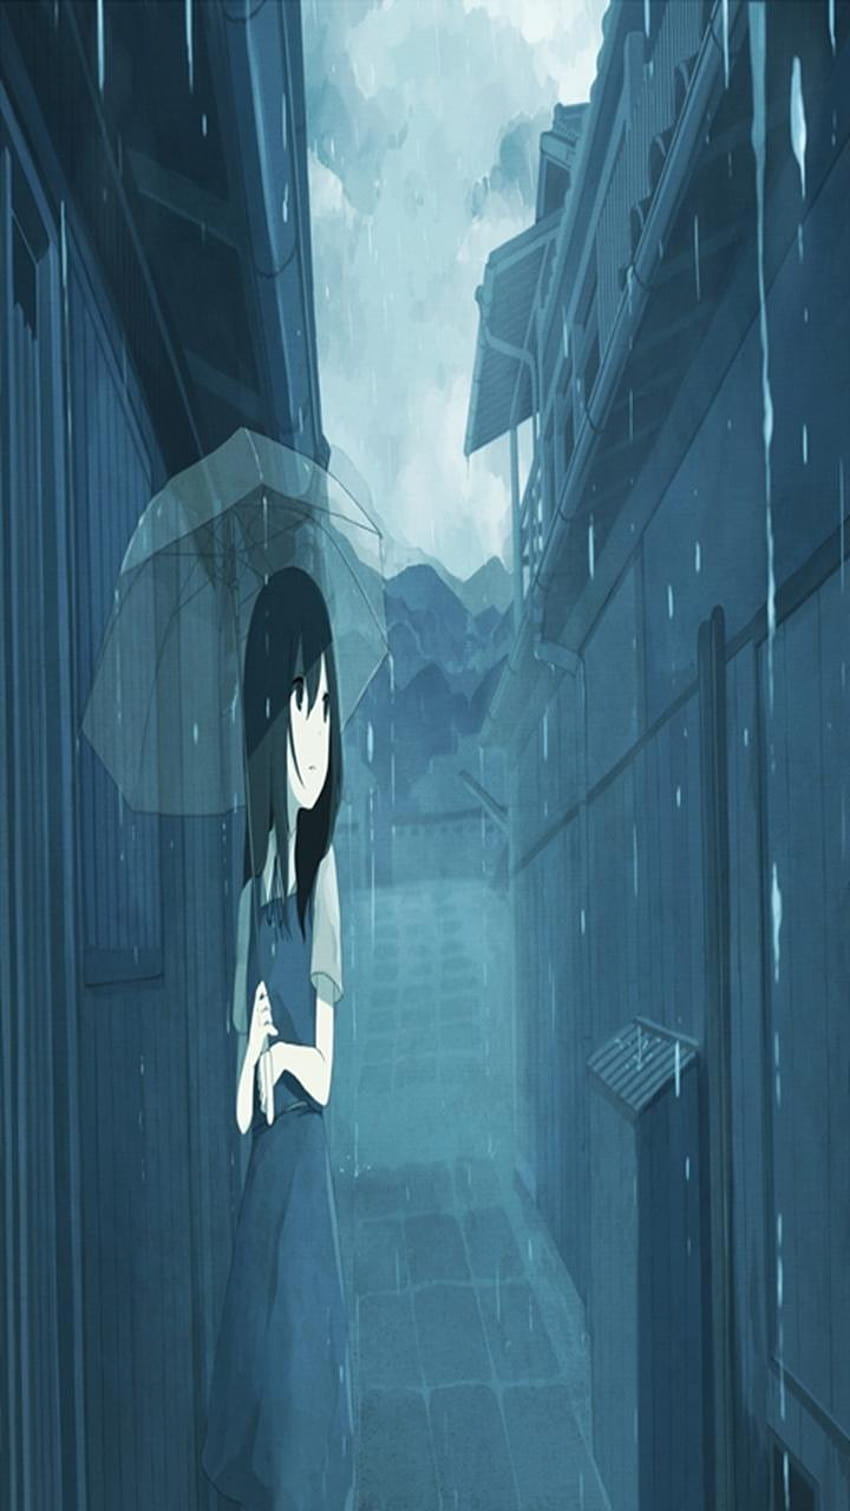 Download do APK de papel de parede estético de anime triste para Android